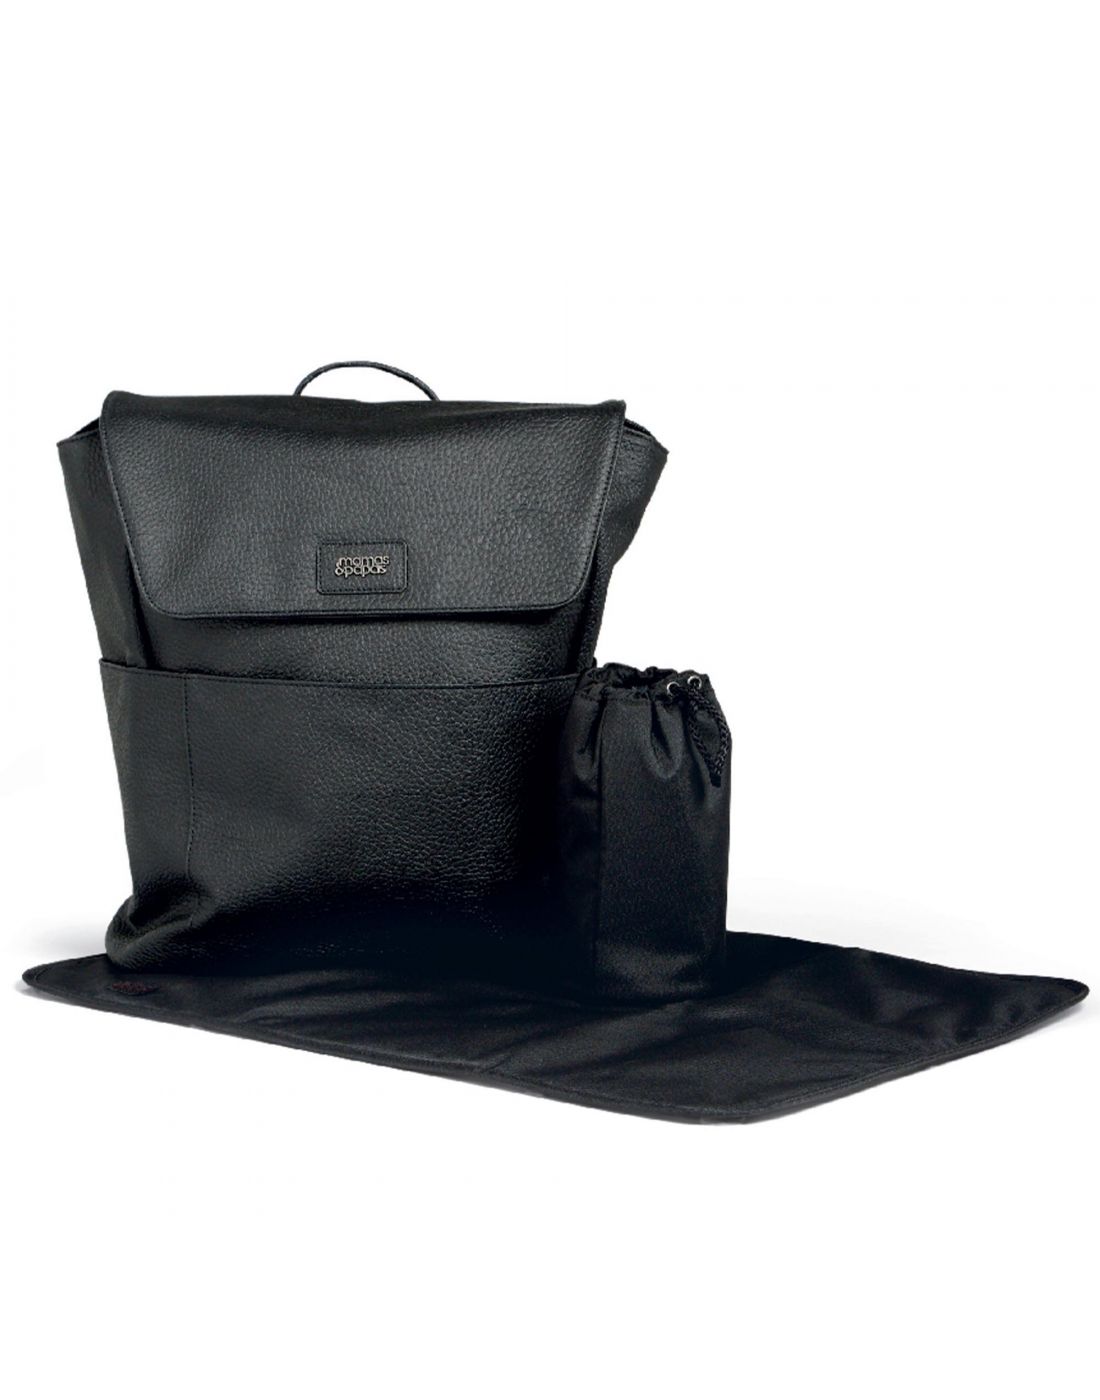 Mamas & Papas Adjustable Changing Backpack - Black